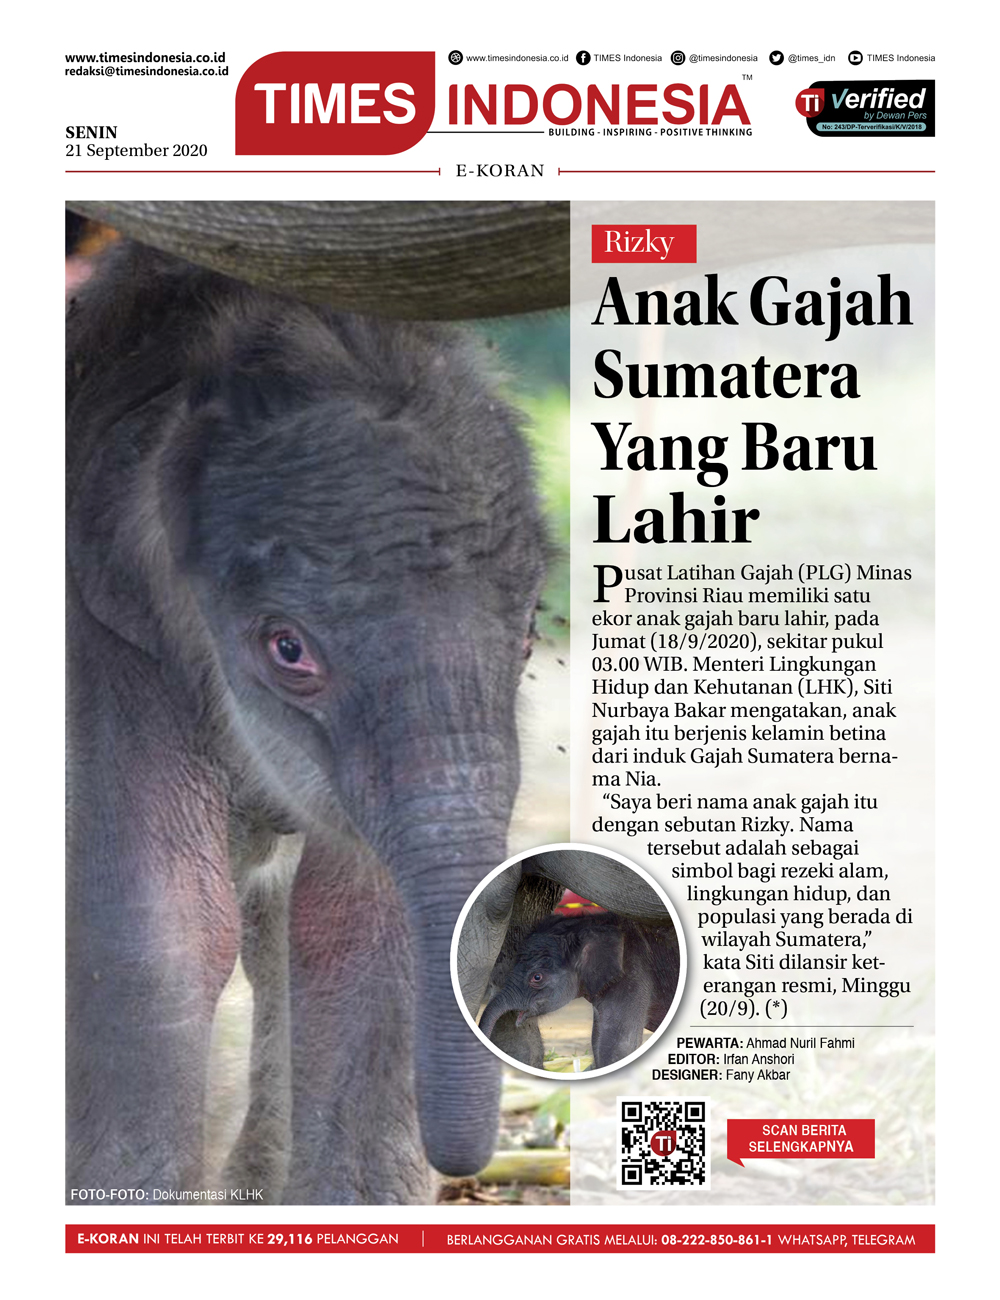 Edisi-Senin-21-September-2020-Anak-Gajah-Sumatera.jpg